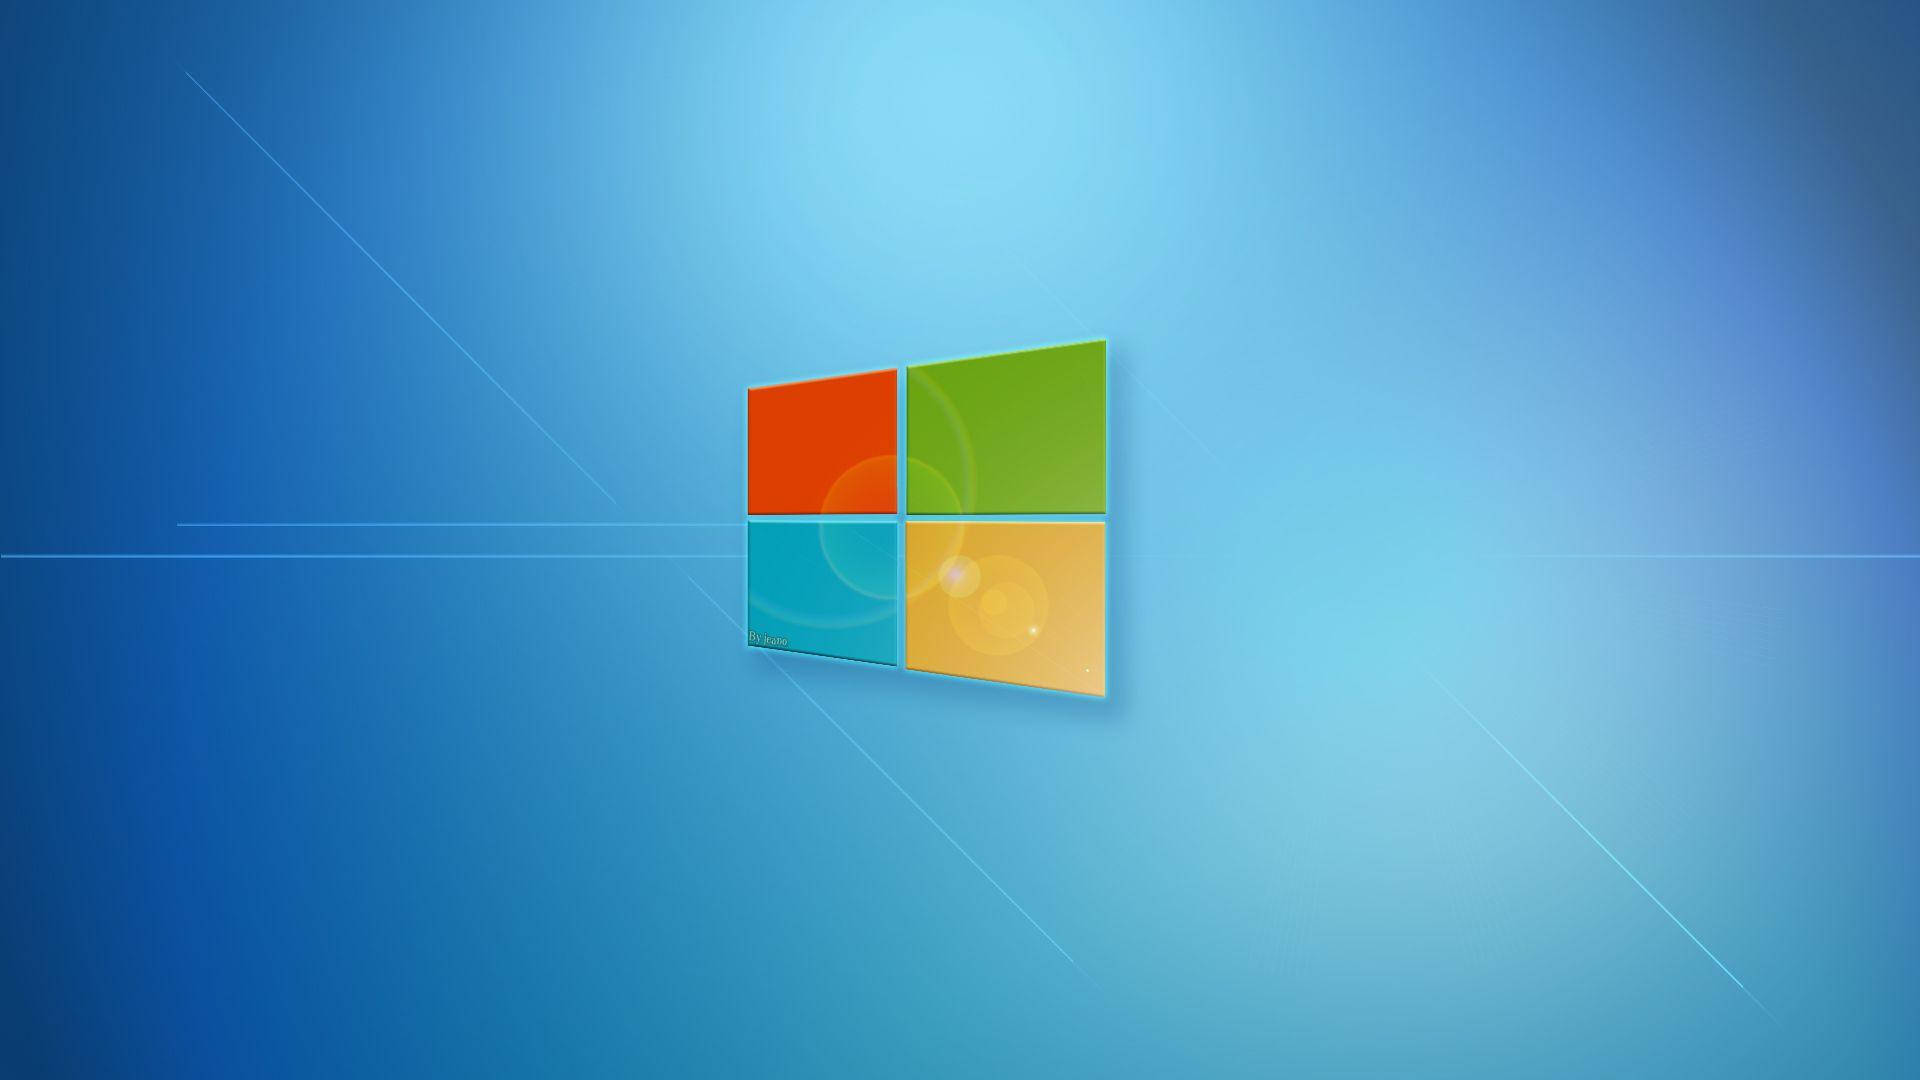 Free Windows 11 Wallpaper Downloads, [200+] Windows 11 Wallpapers for